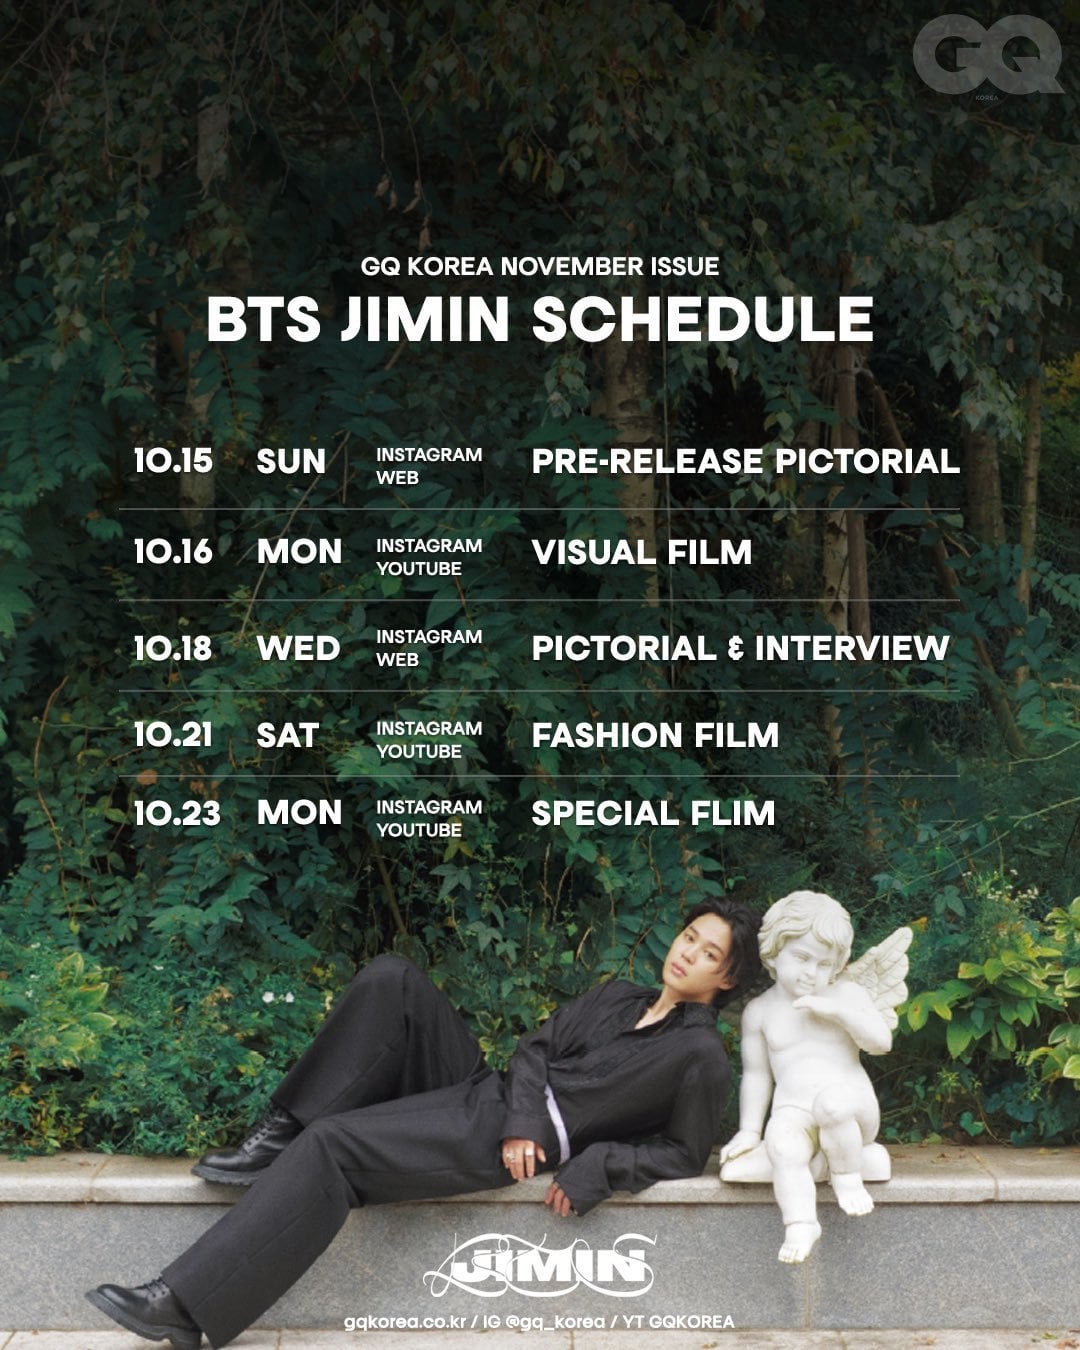 231012 GQ Korea on Twitter: GQ Korea Nov Issue BTS Jimin Schedule